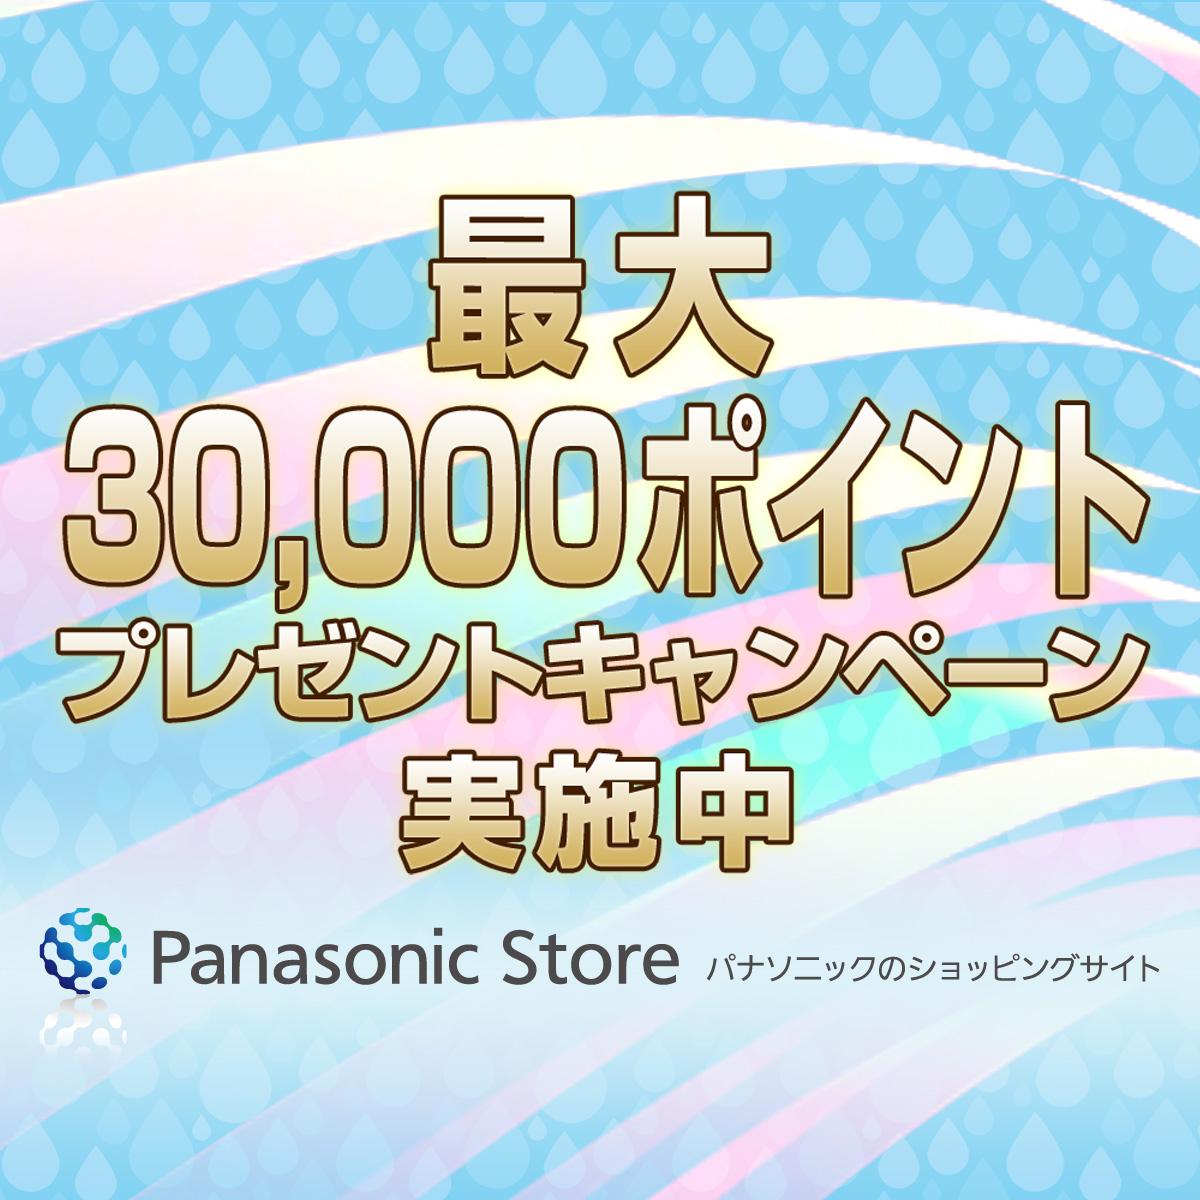 【Panasonic Store】夏のお客様感謝キャンペーン実施中！